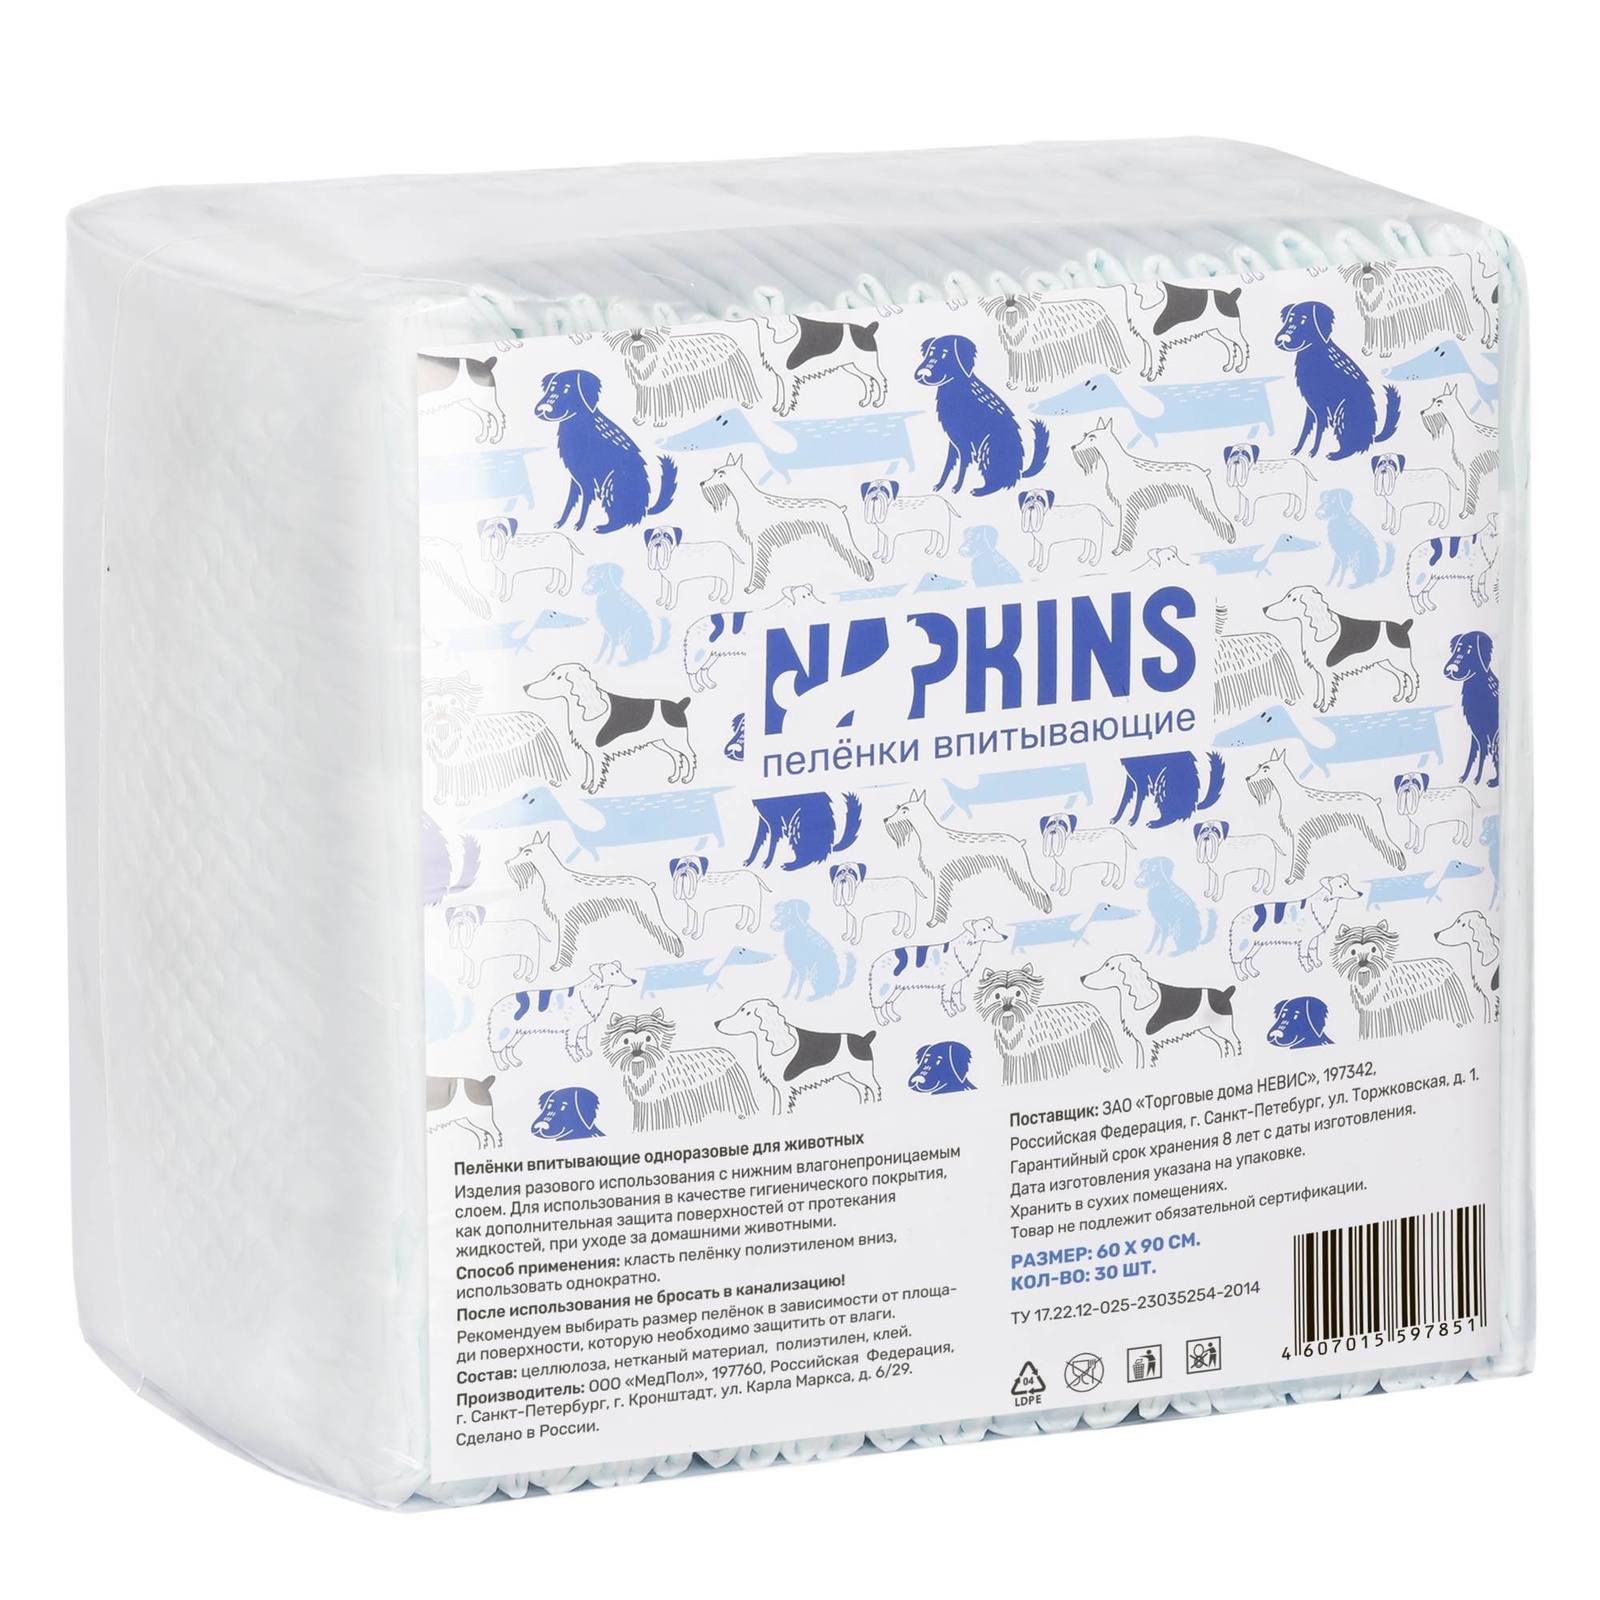 NAPKINS NAPKINS впитывающие пелёнки с целлюлозой для собак 60х90 (300 г) napkins napkins гелевые пелёнки для собак 60х40 300 г